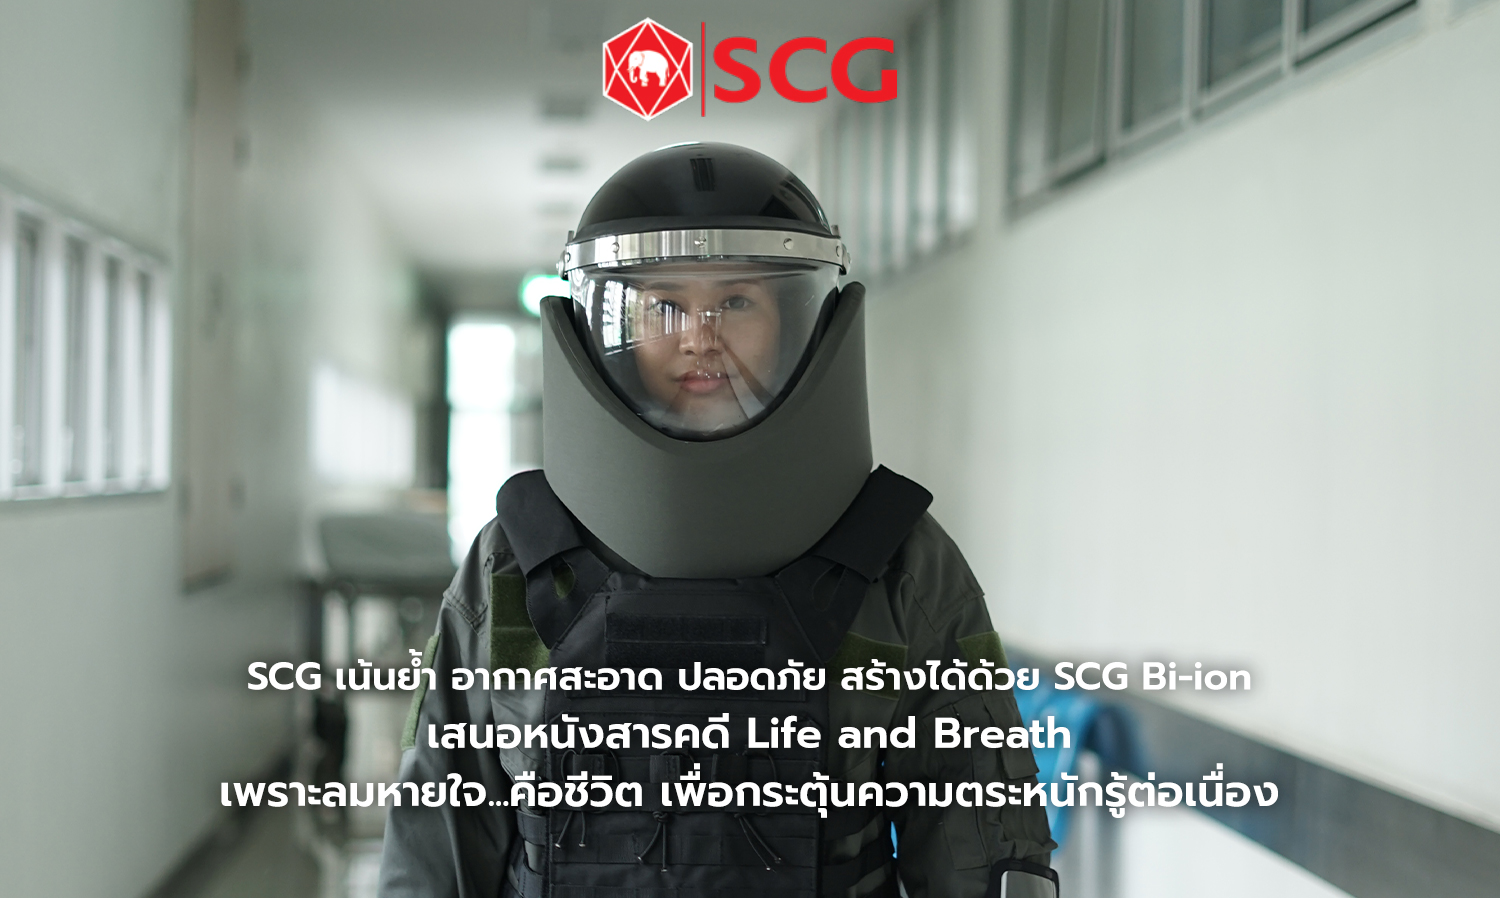 SCG เน้นย้ำ อากาศสะอาด ปลอดภัย สร้างได้ด้วย SCG Bi-ion เสนอหนังสารคดี Life and Breath เพราะลมหายใจ...คือชีวิต เพื่อกระตุ้นความตระหนักรู้ต่อเนื่อง